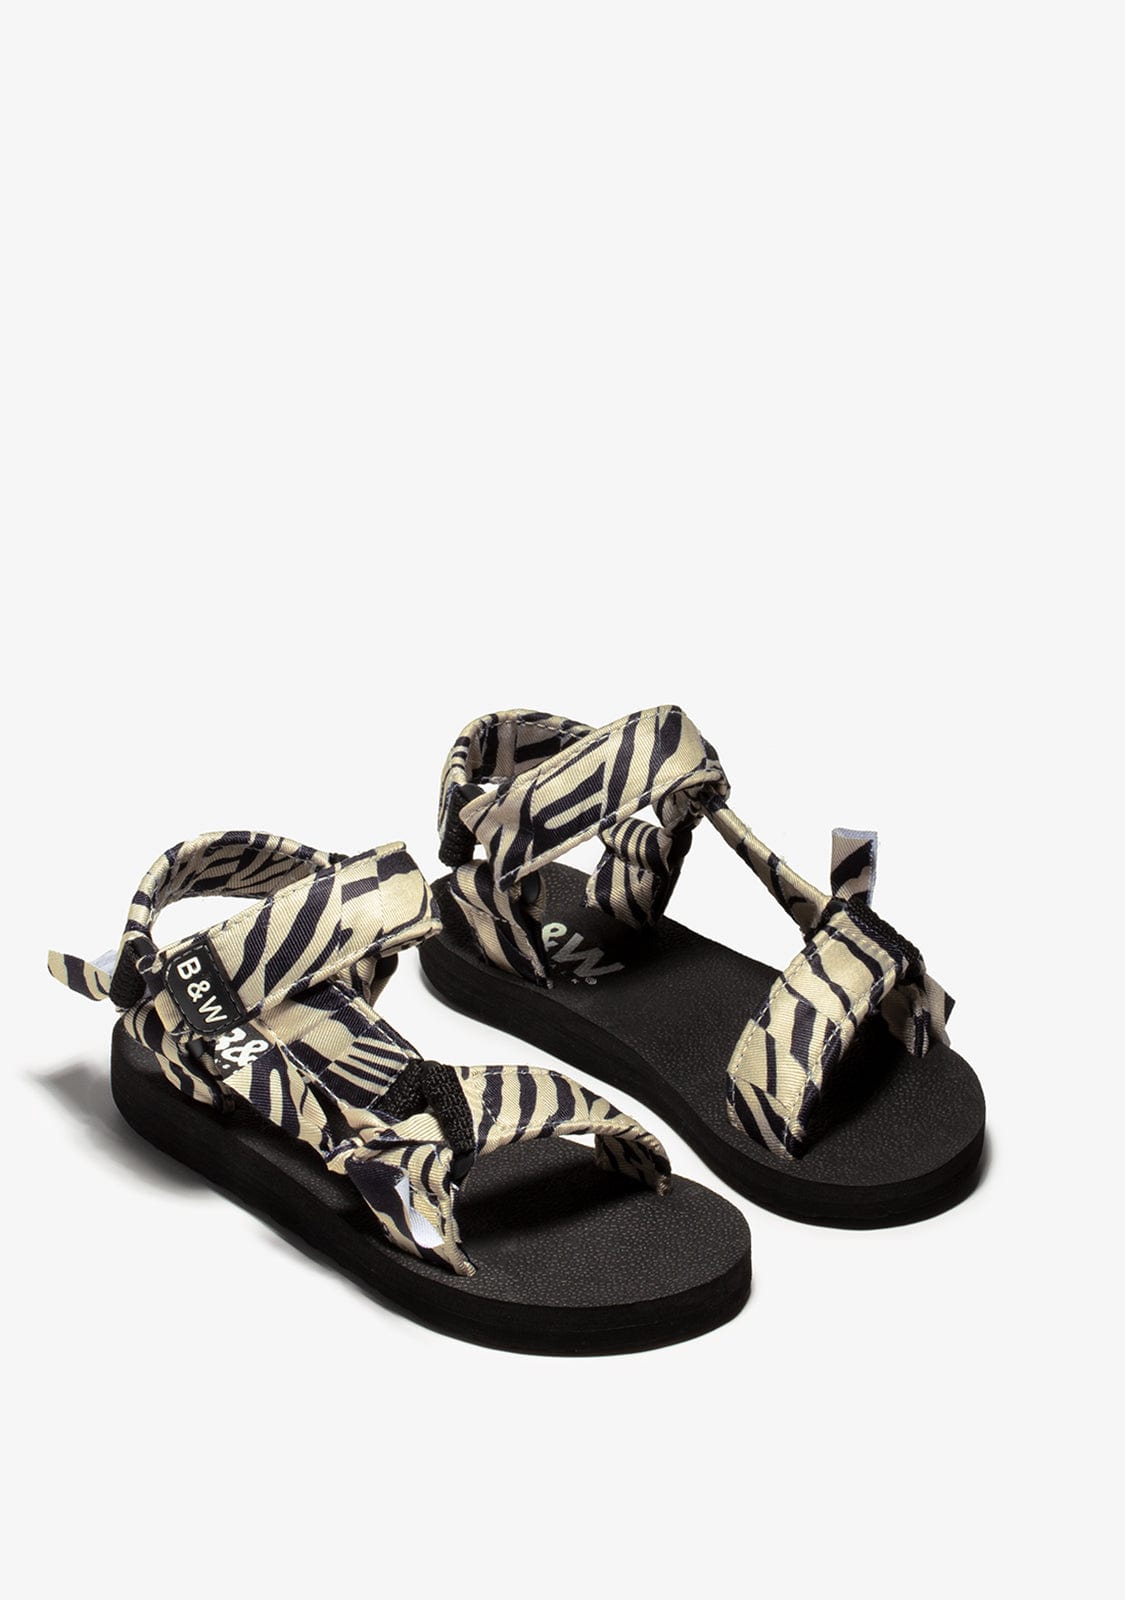 B&W JUNIOR Shoes Girl's Zebra Sandals B&W